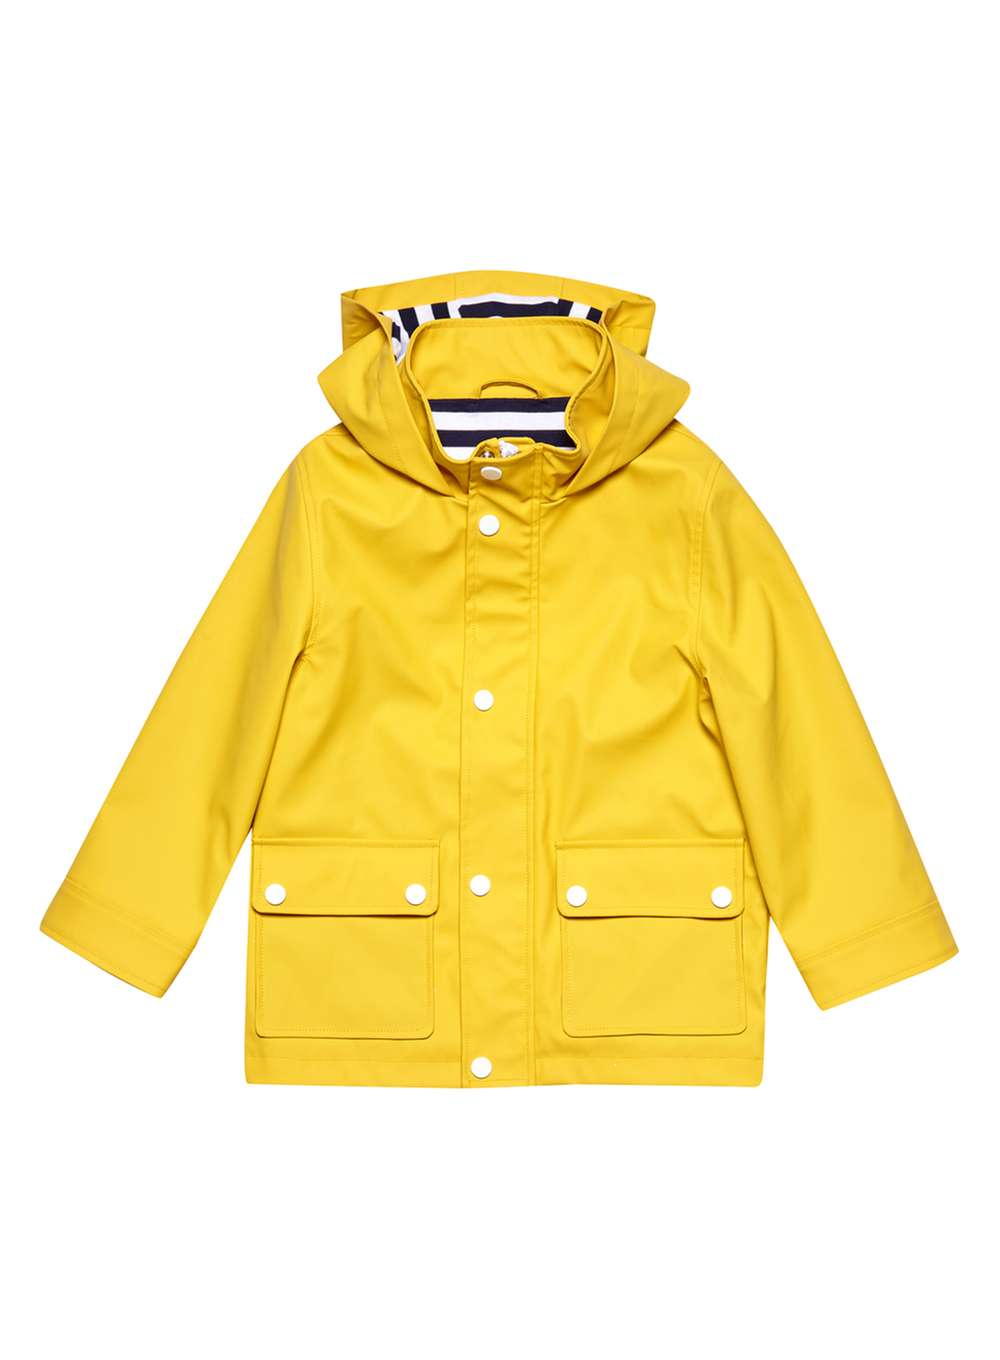 7. Yellow Hooded Rain Mac